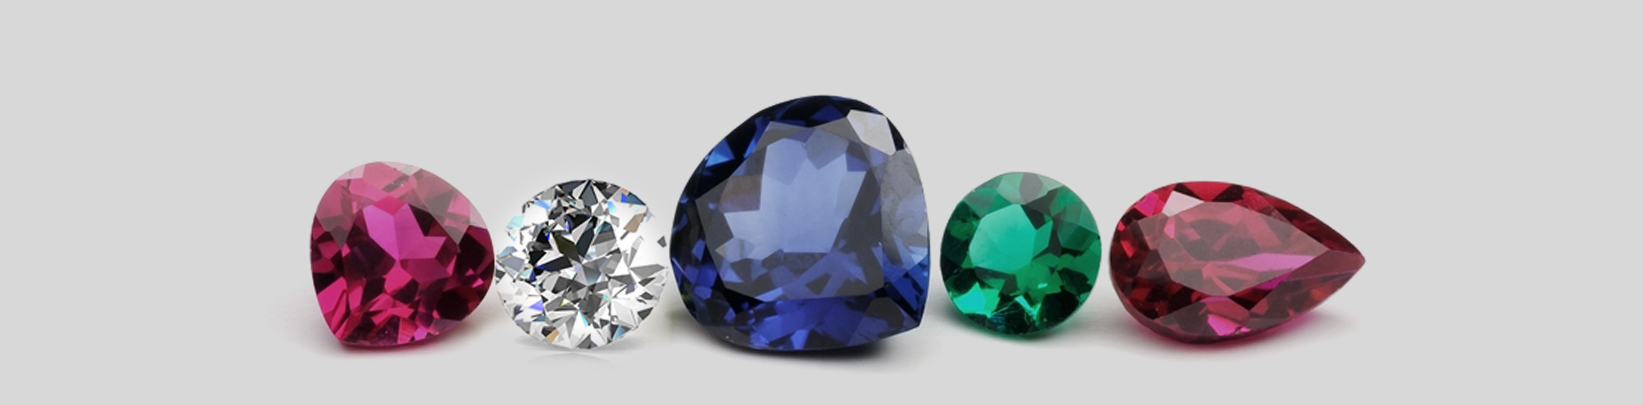 Oval Gemstones